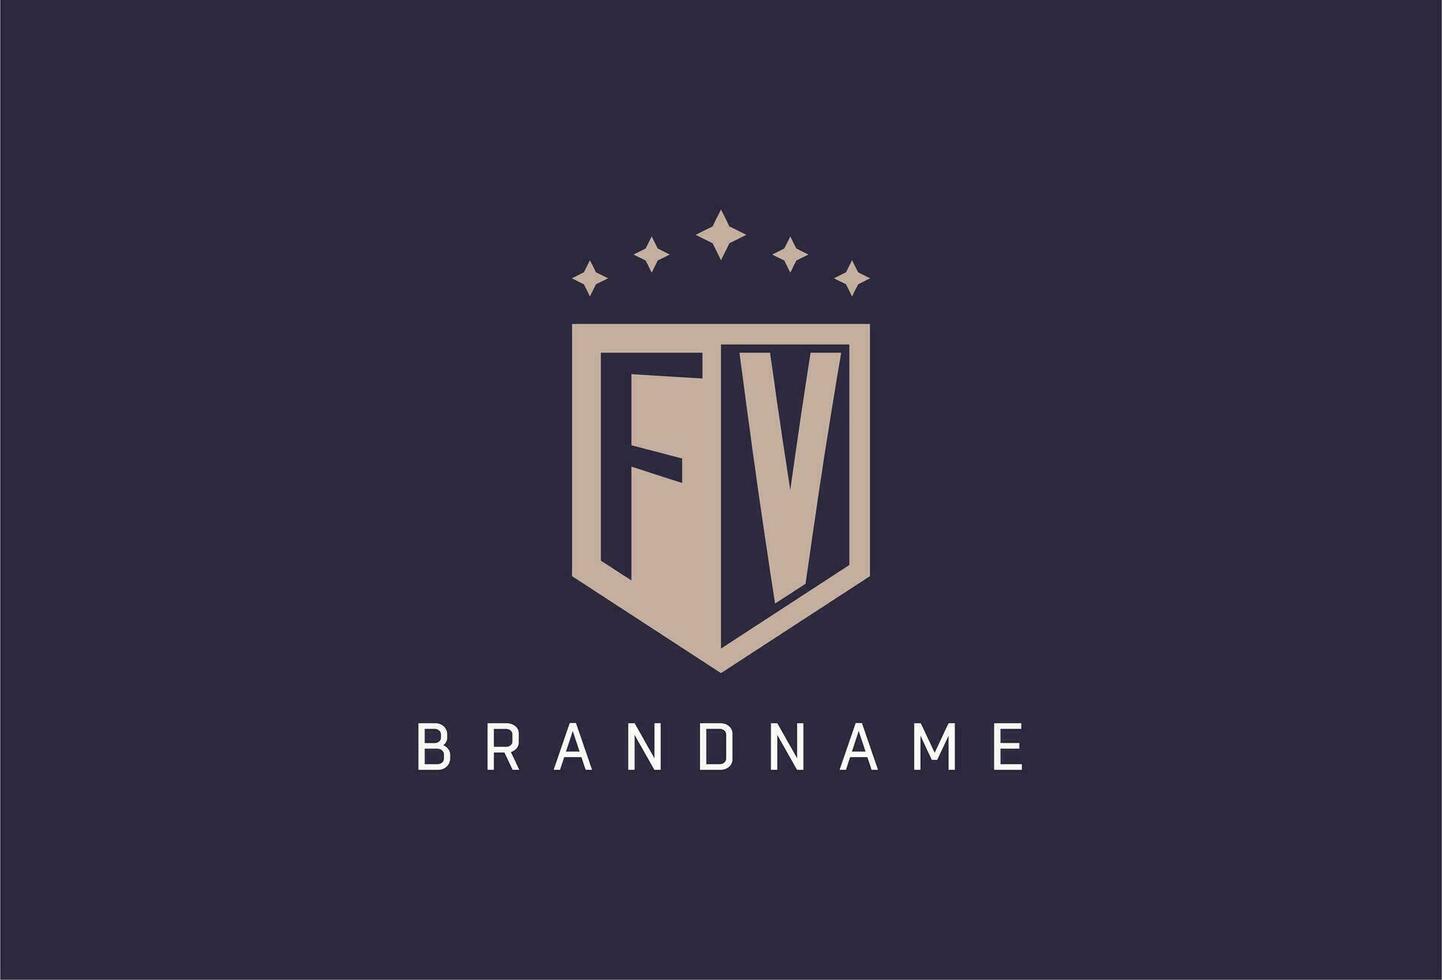 FV initial shield logo icon geometric style design vector